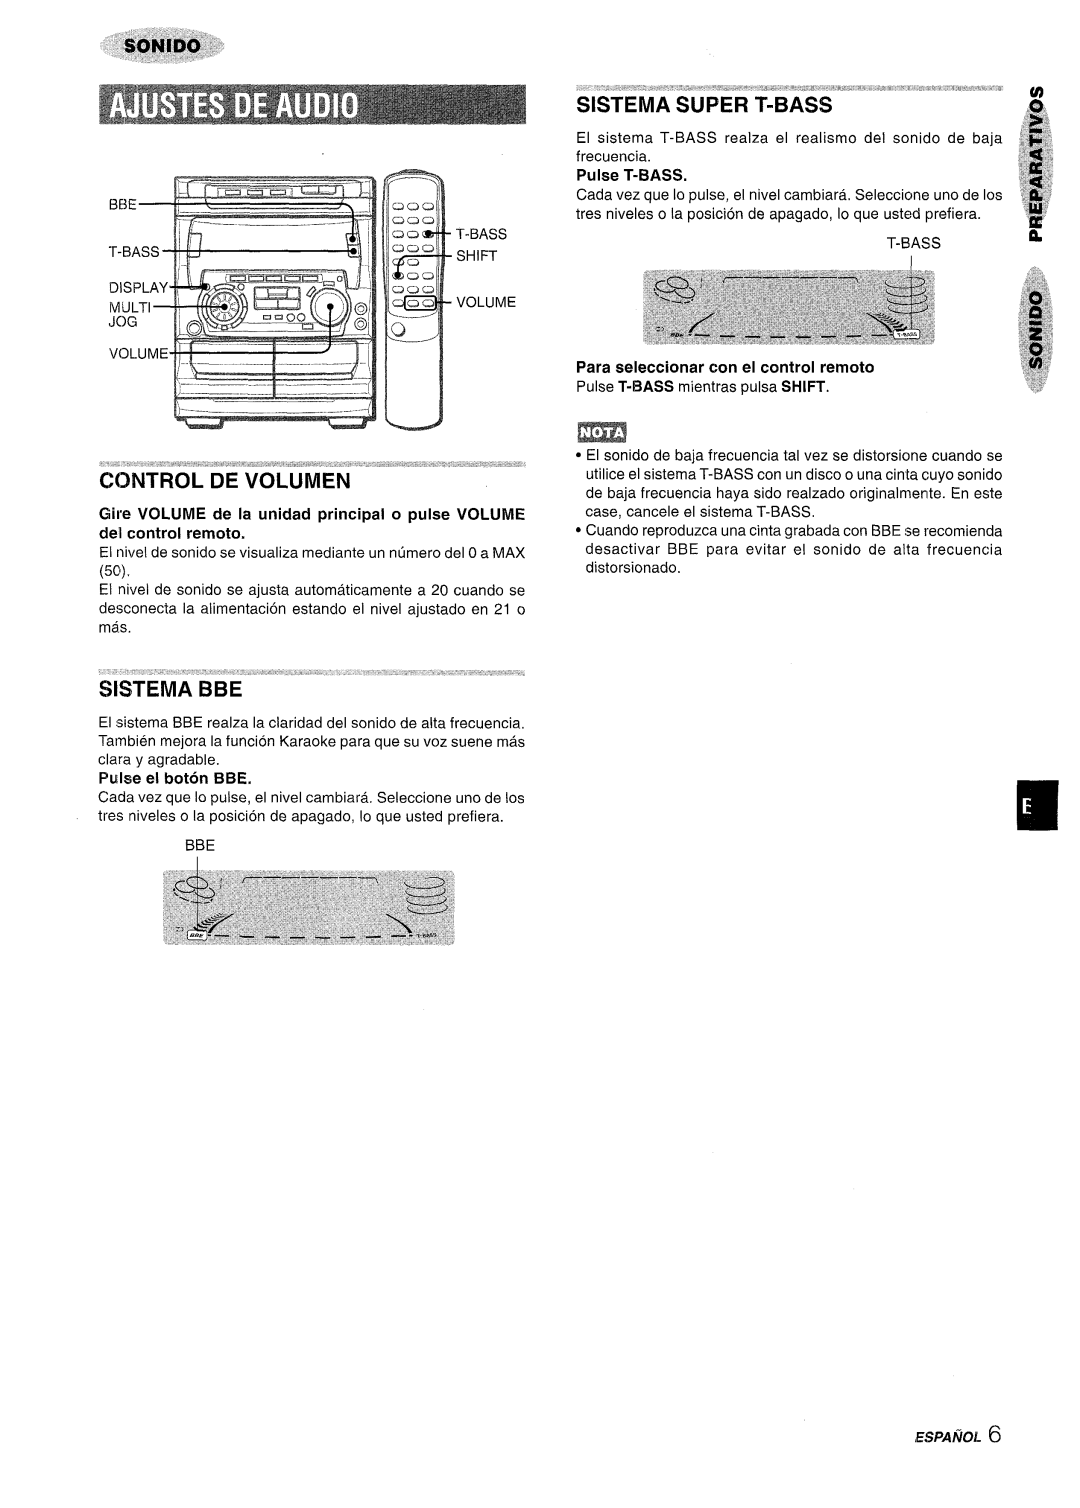 Sony NSX-A707 manual Sistema Super T-Bass, Gire VOLUME de la unidad principal o pulse VOLUME dei control remoto 